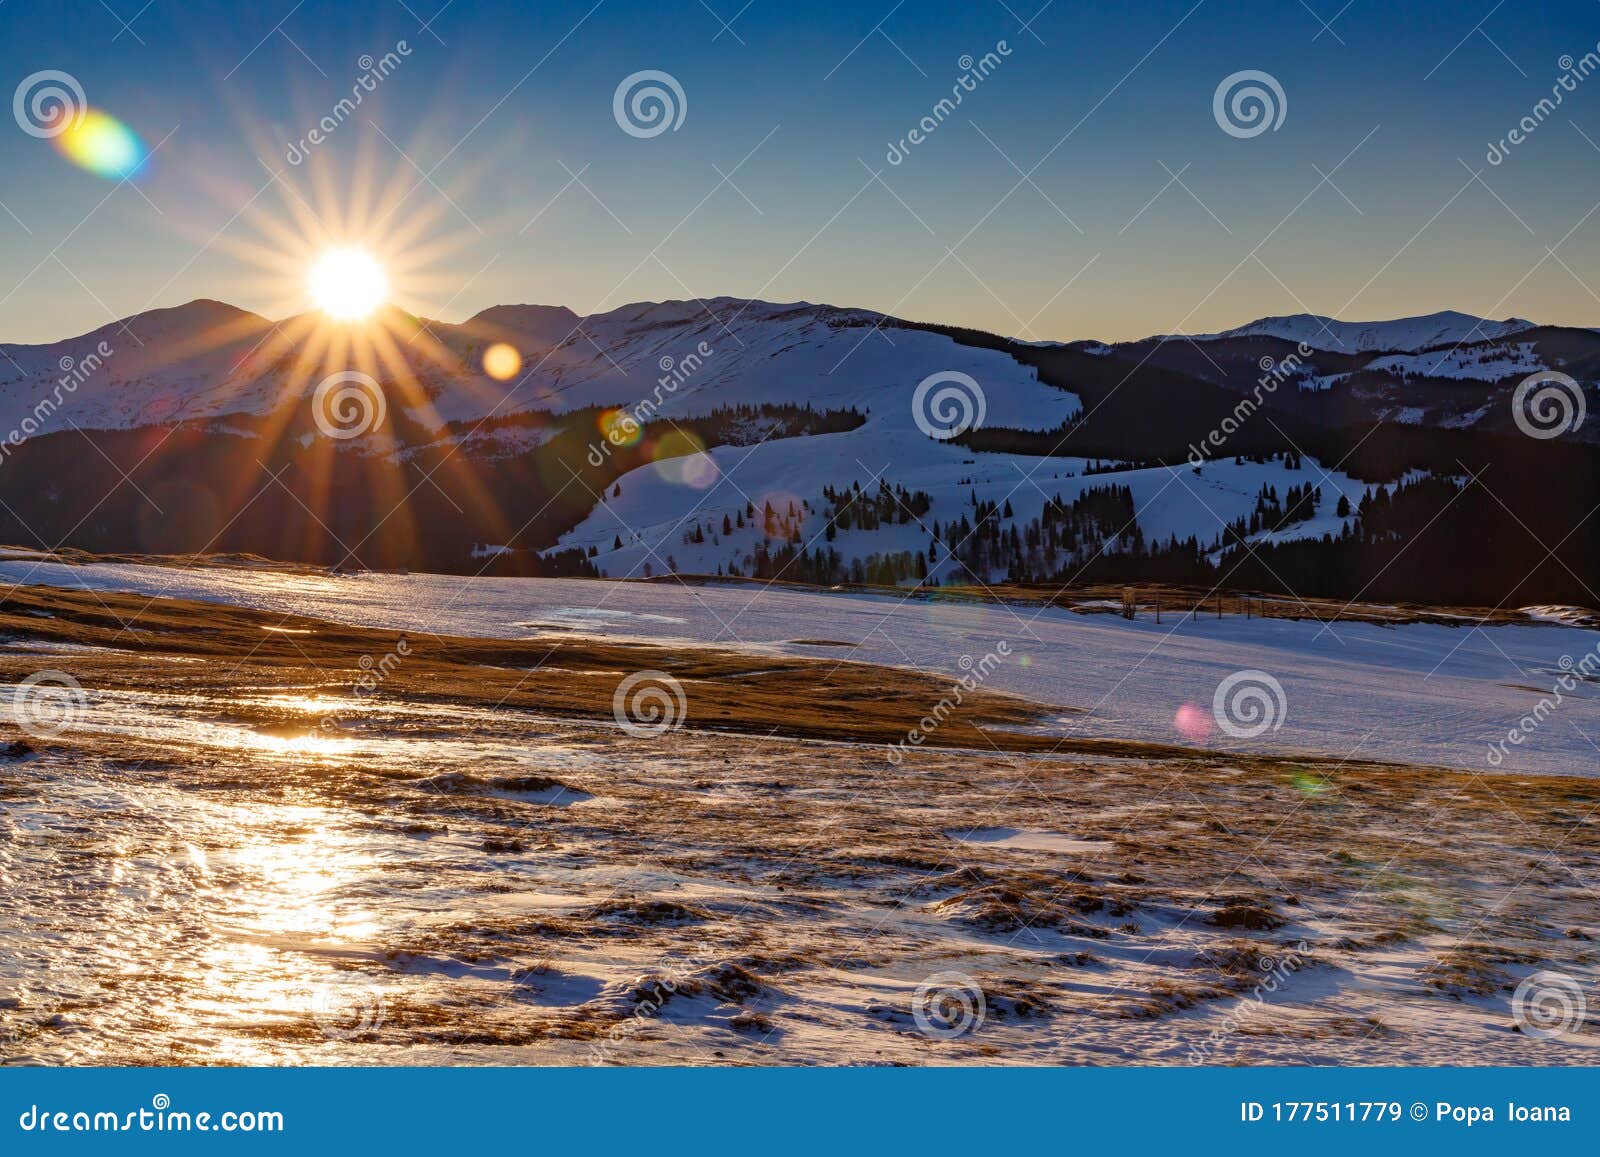 beautiful mountain landscap ein winter. rodnei mountains